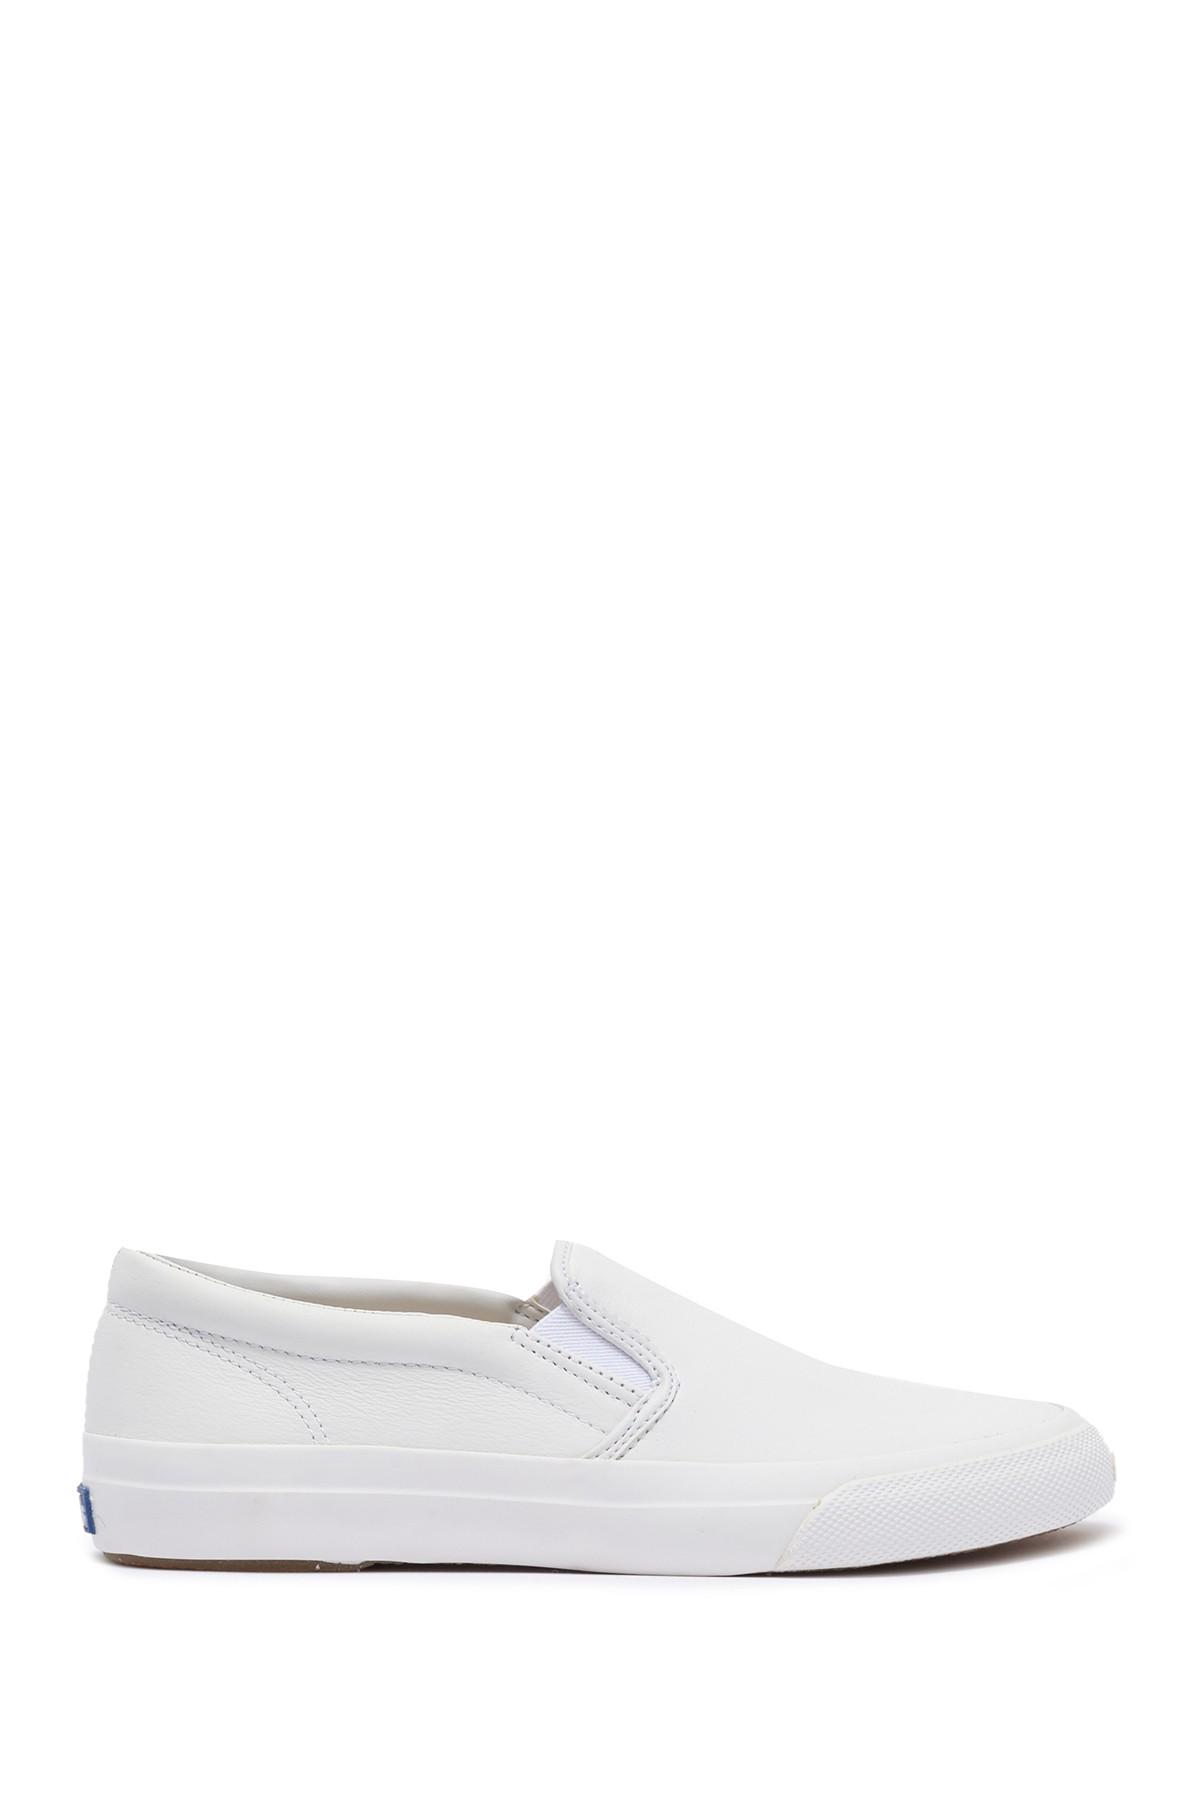 Keds Anchor Leather Slip-on Sneaker in White - Lyst